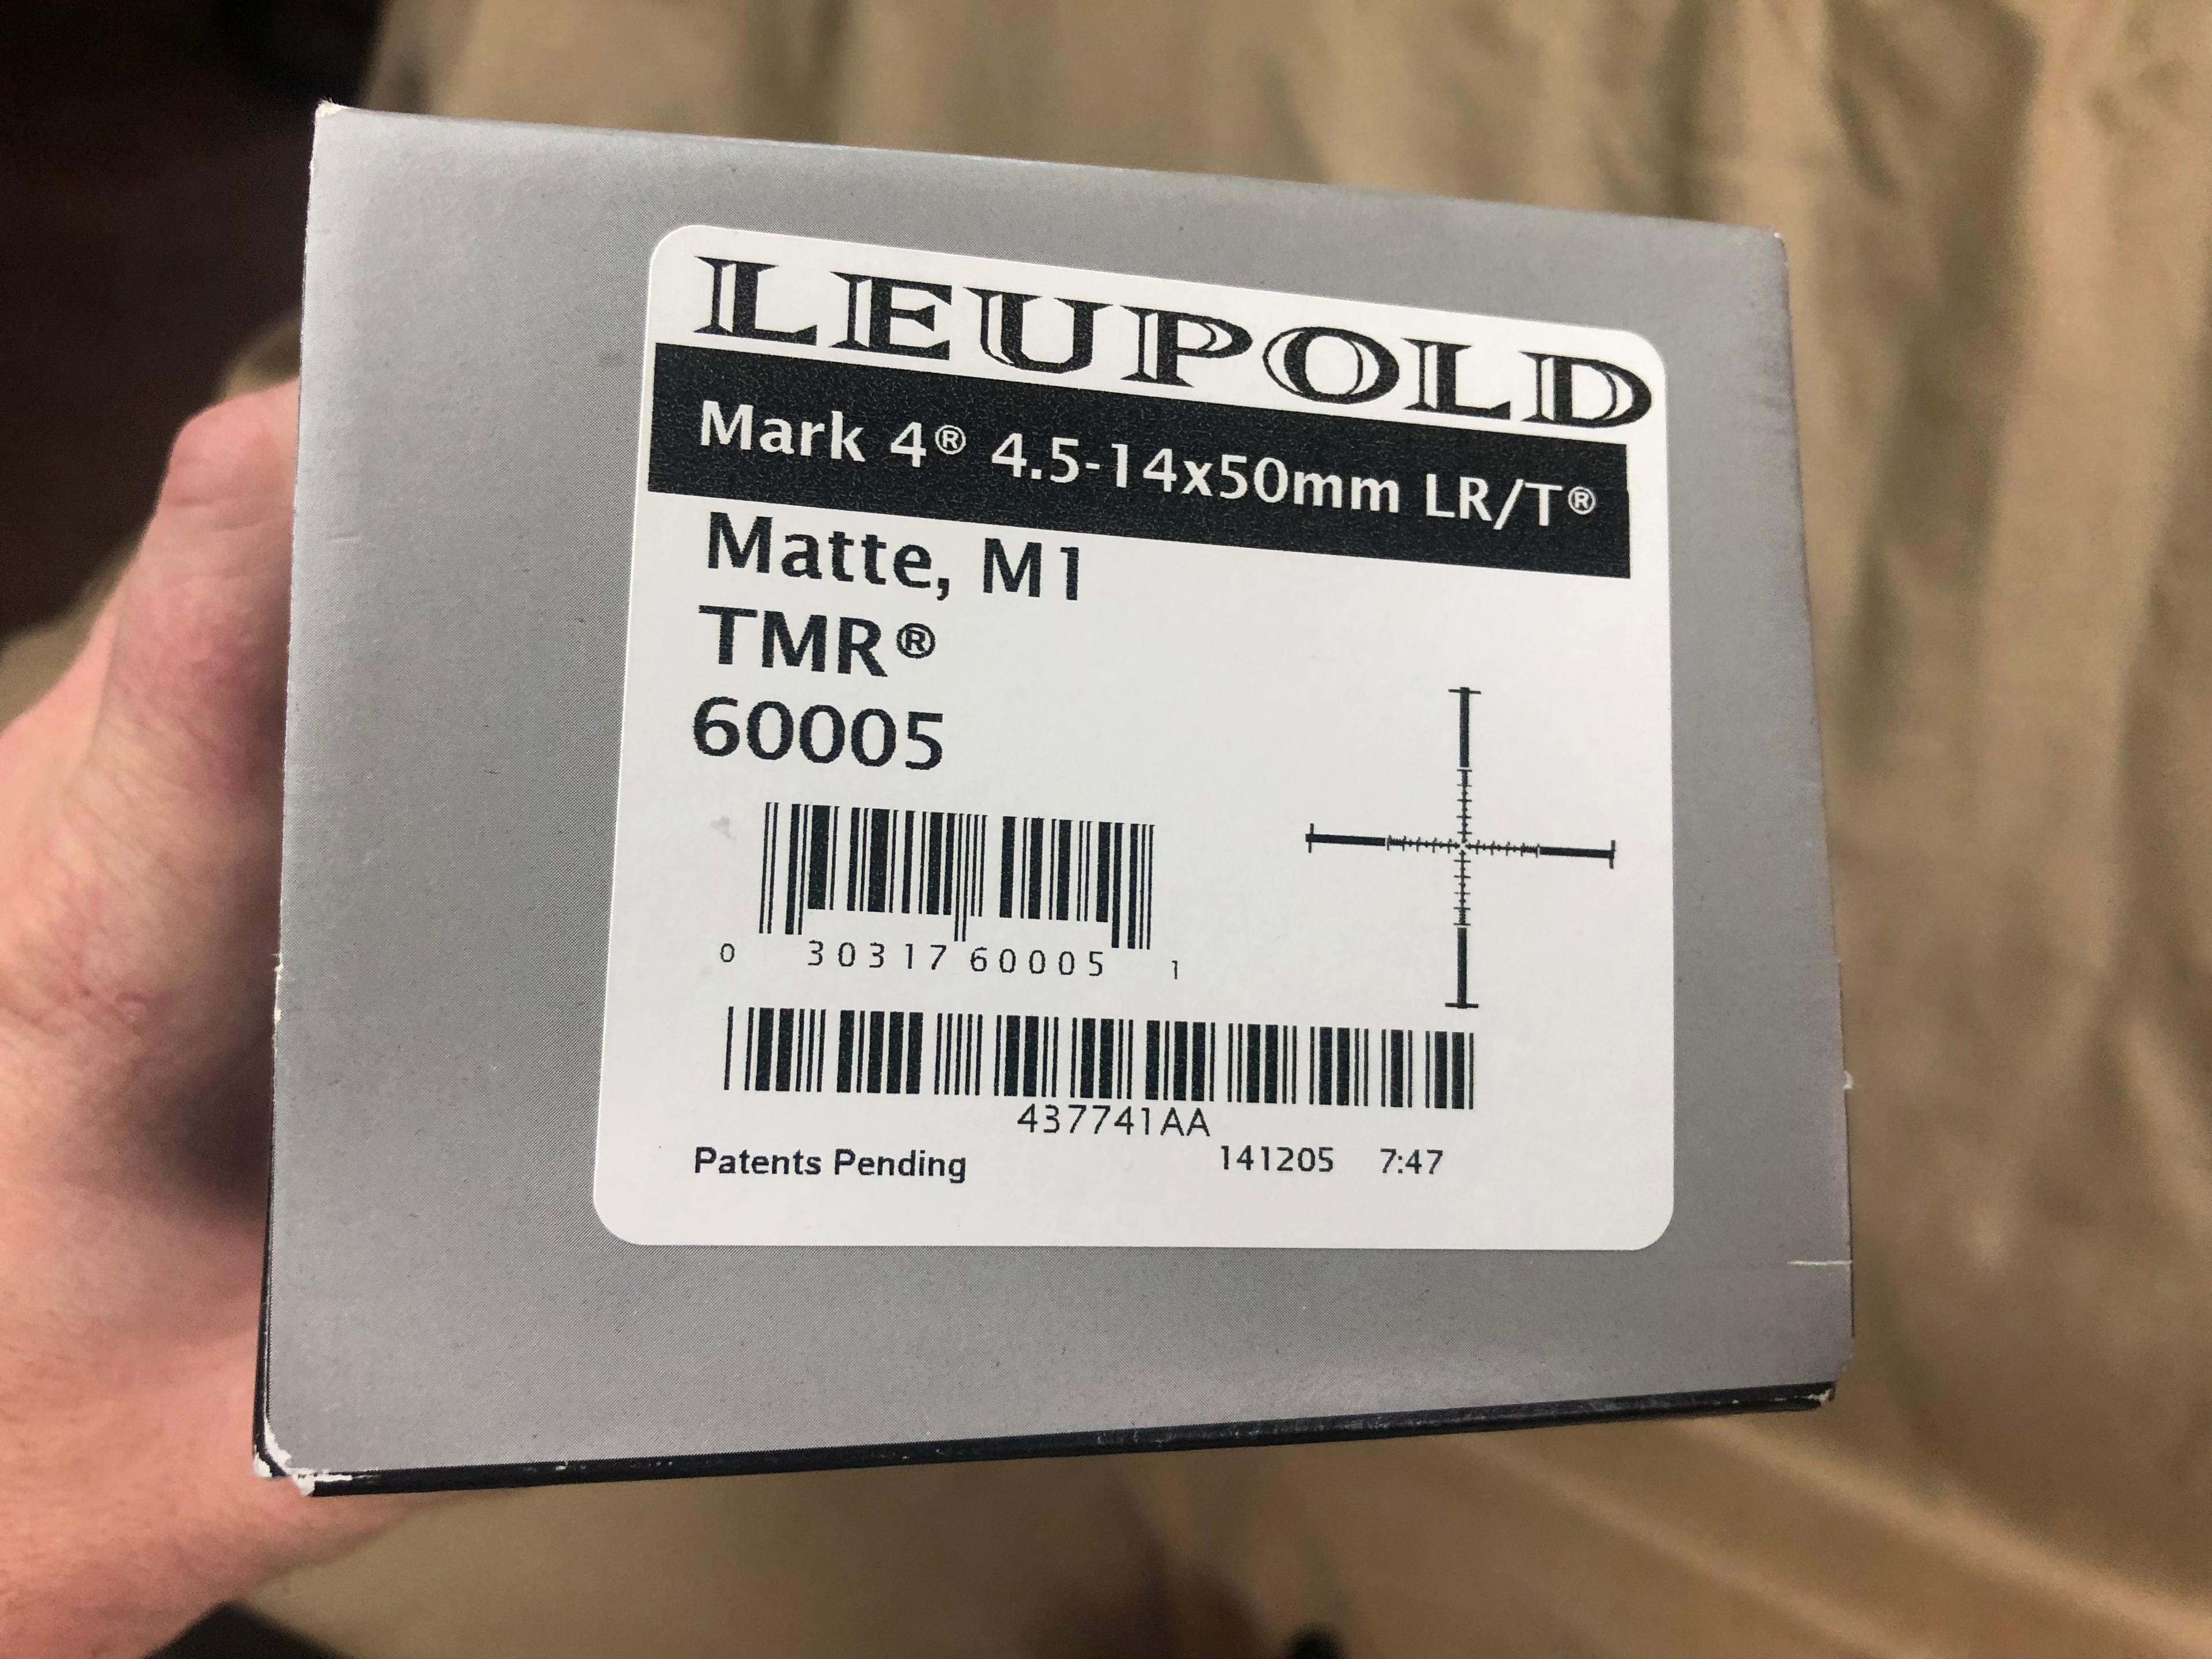 Leupold Mark 4 4.5-14x50